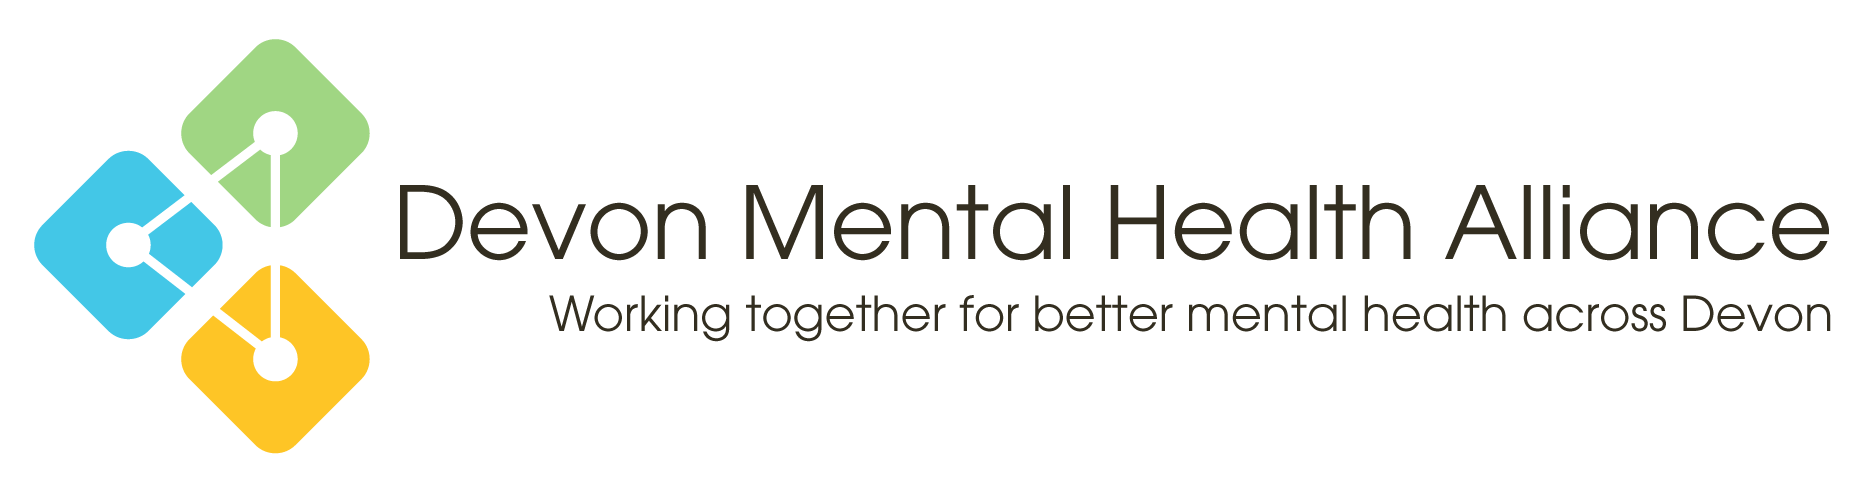 Key community mental health milestone reached